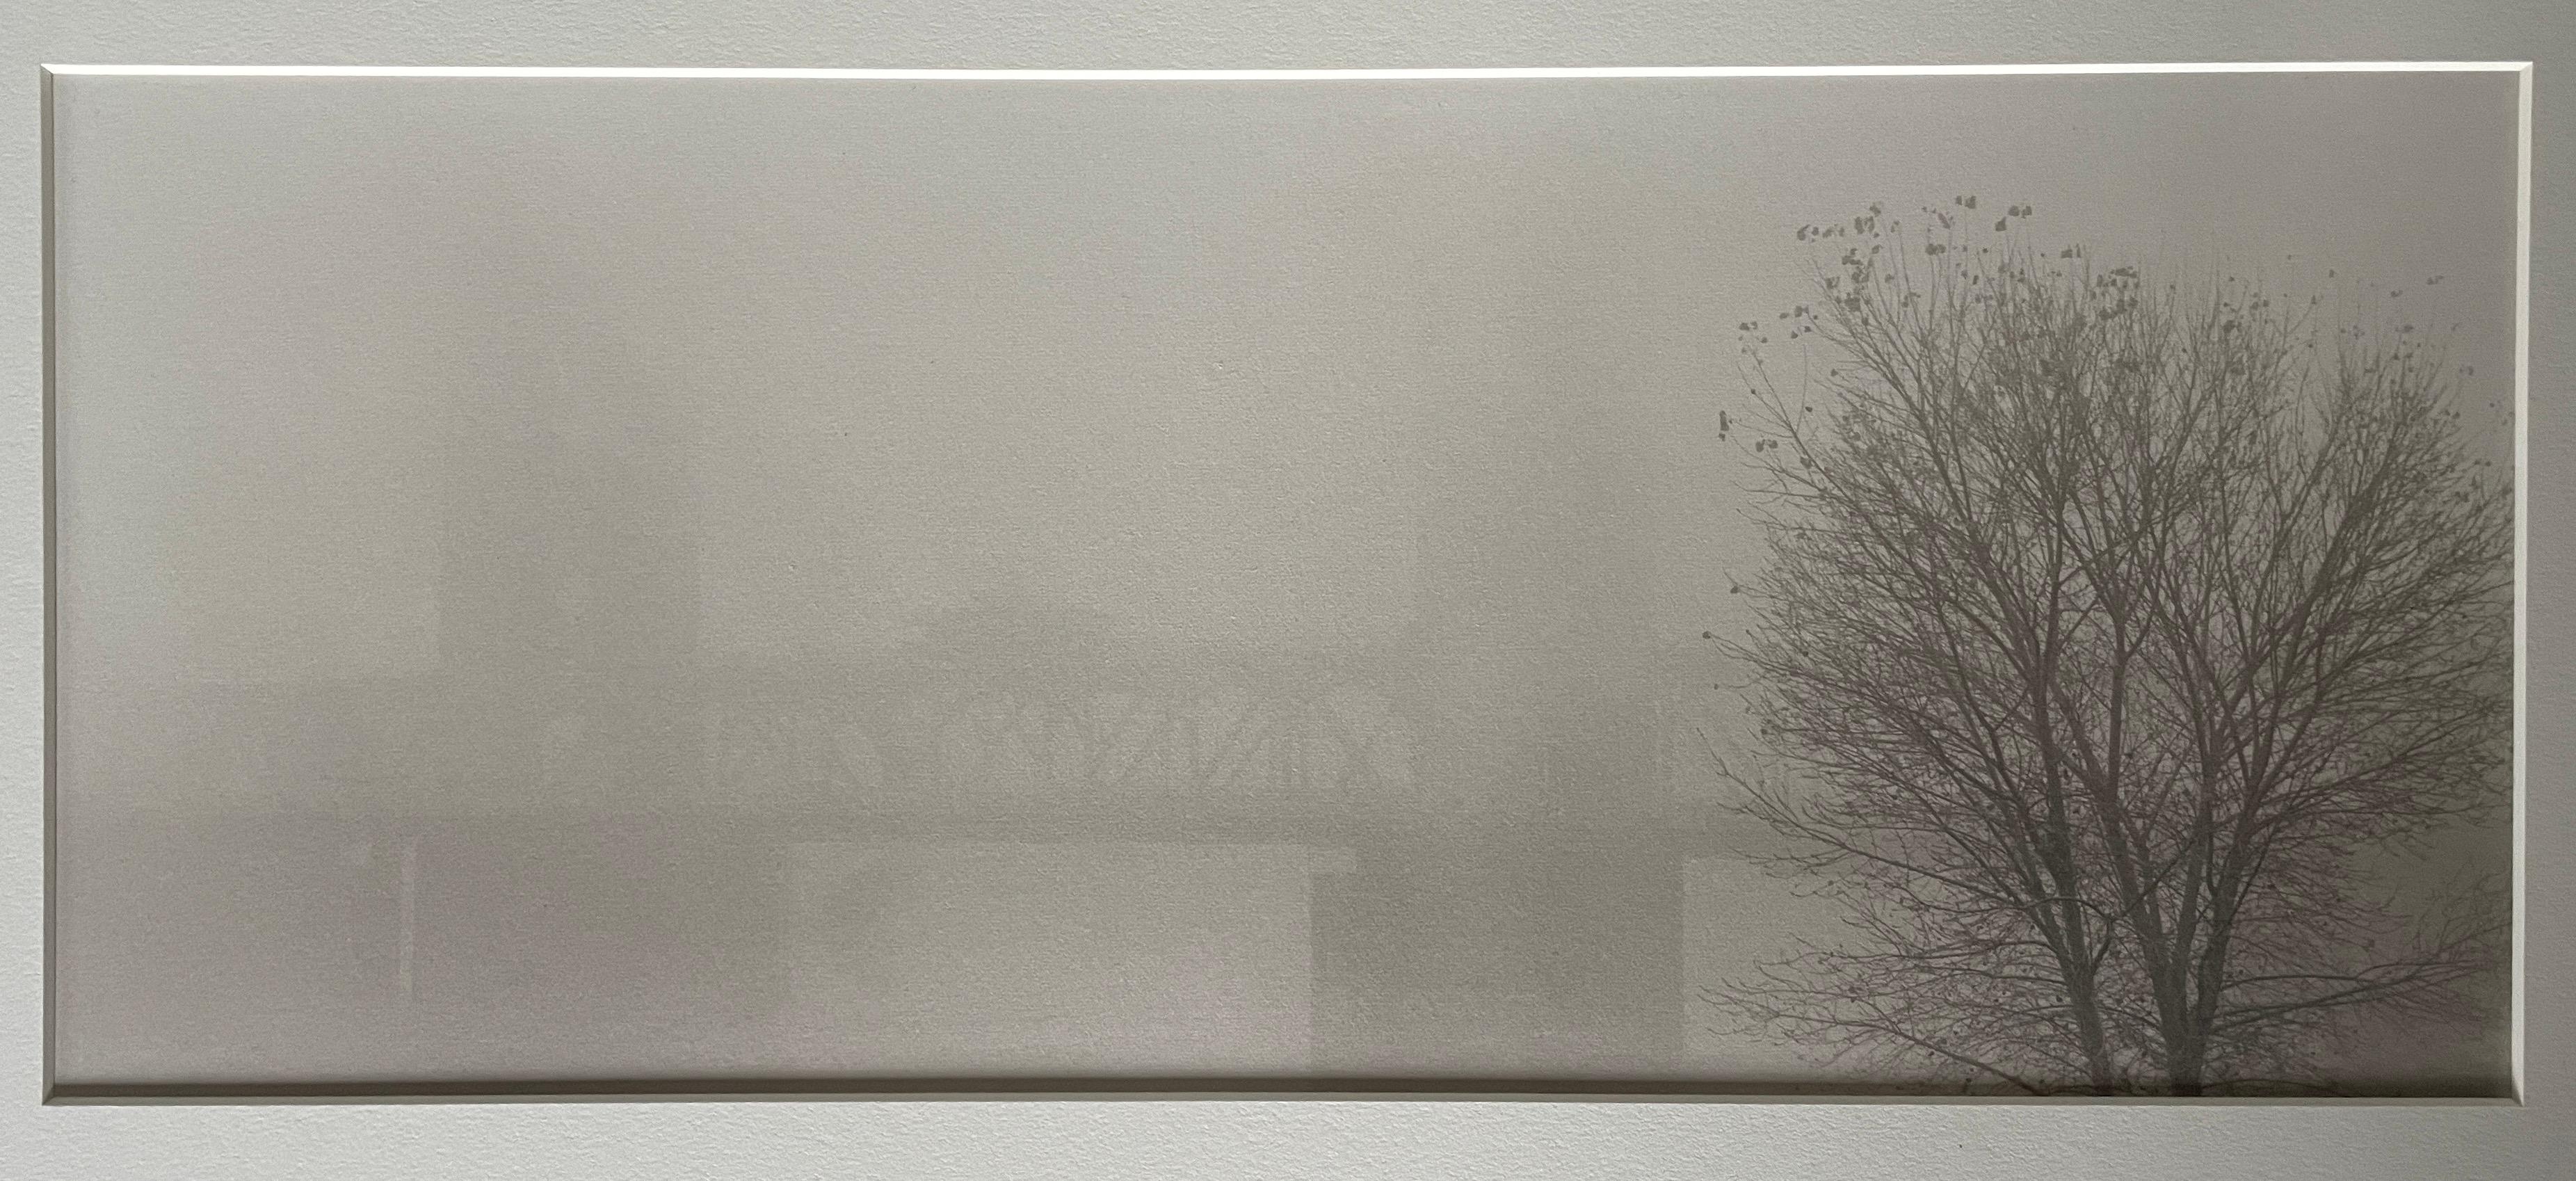 Kerik Kouklis Black and White Photograph – Tower Bridge In Fog, Sacramento, Kalifornien